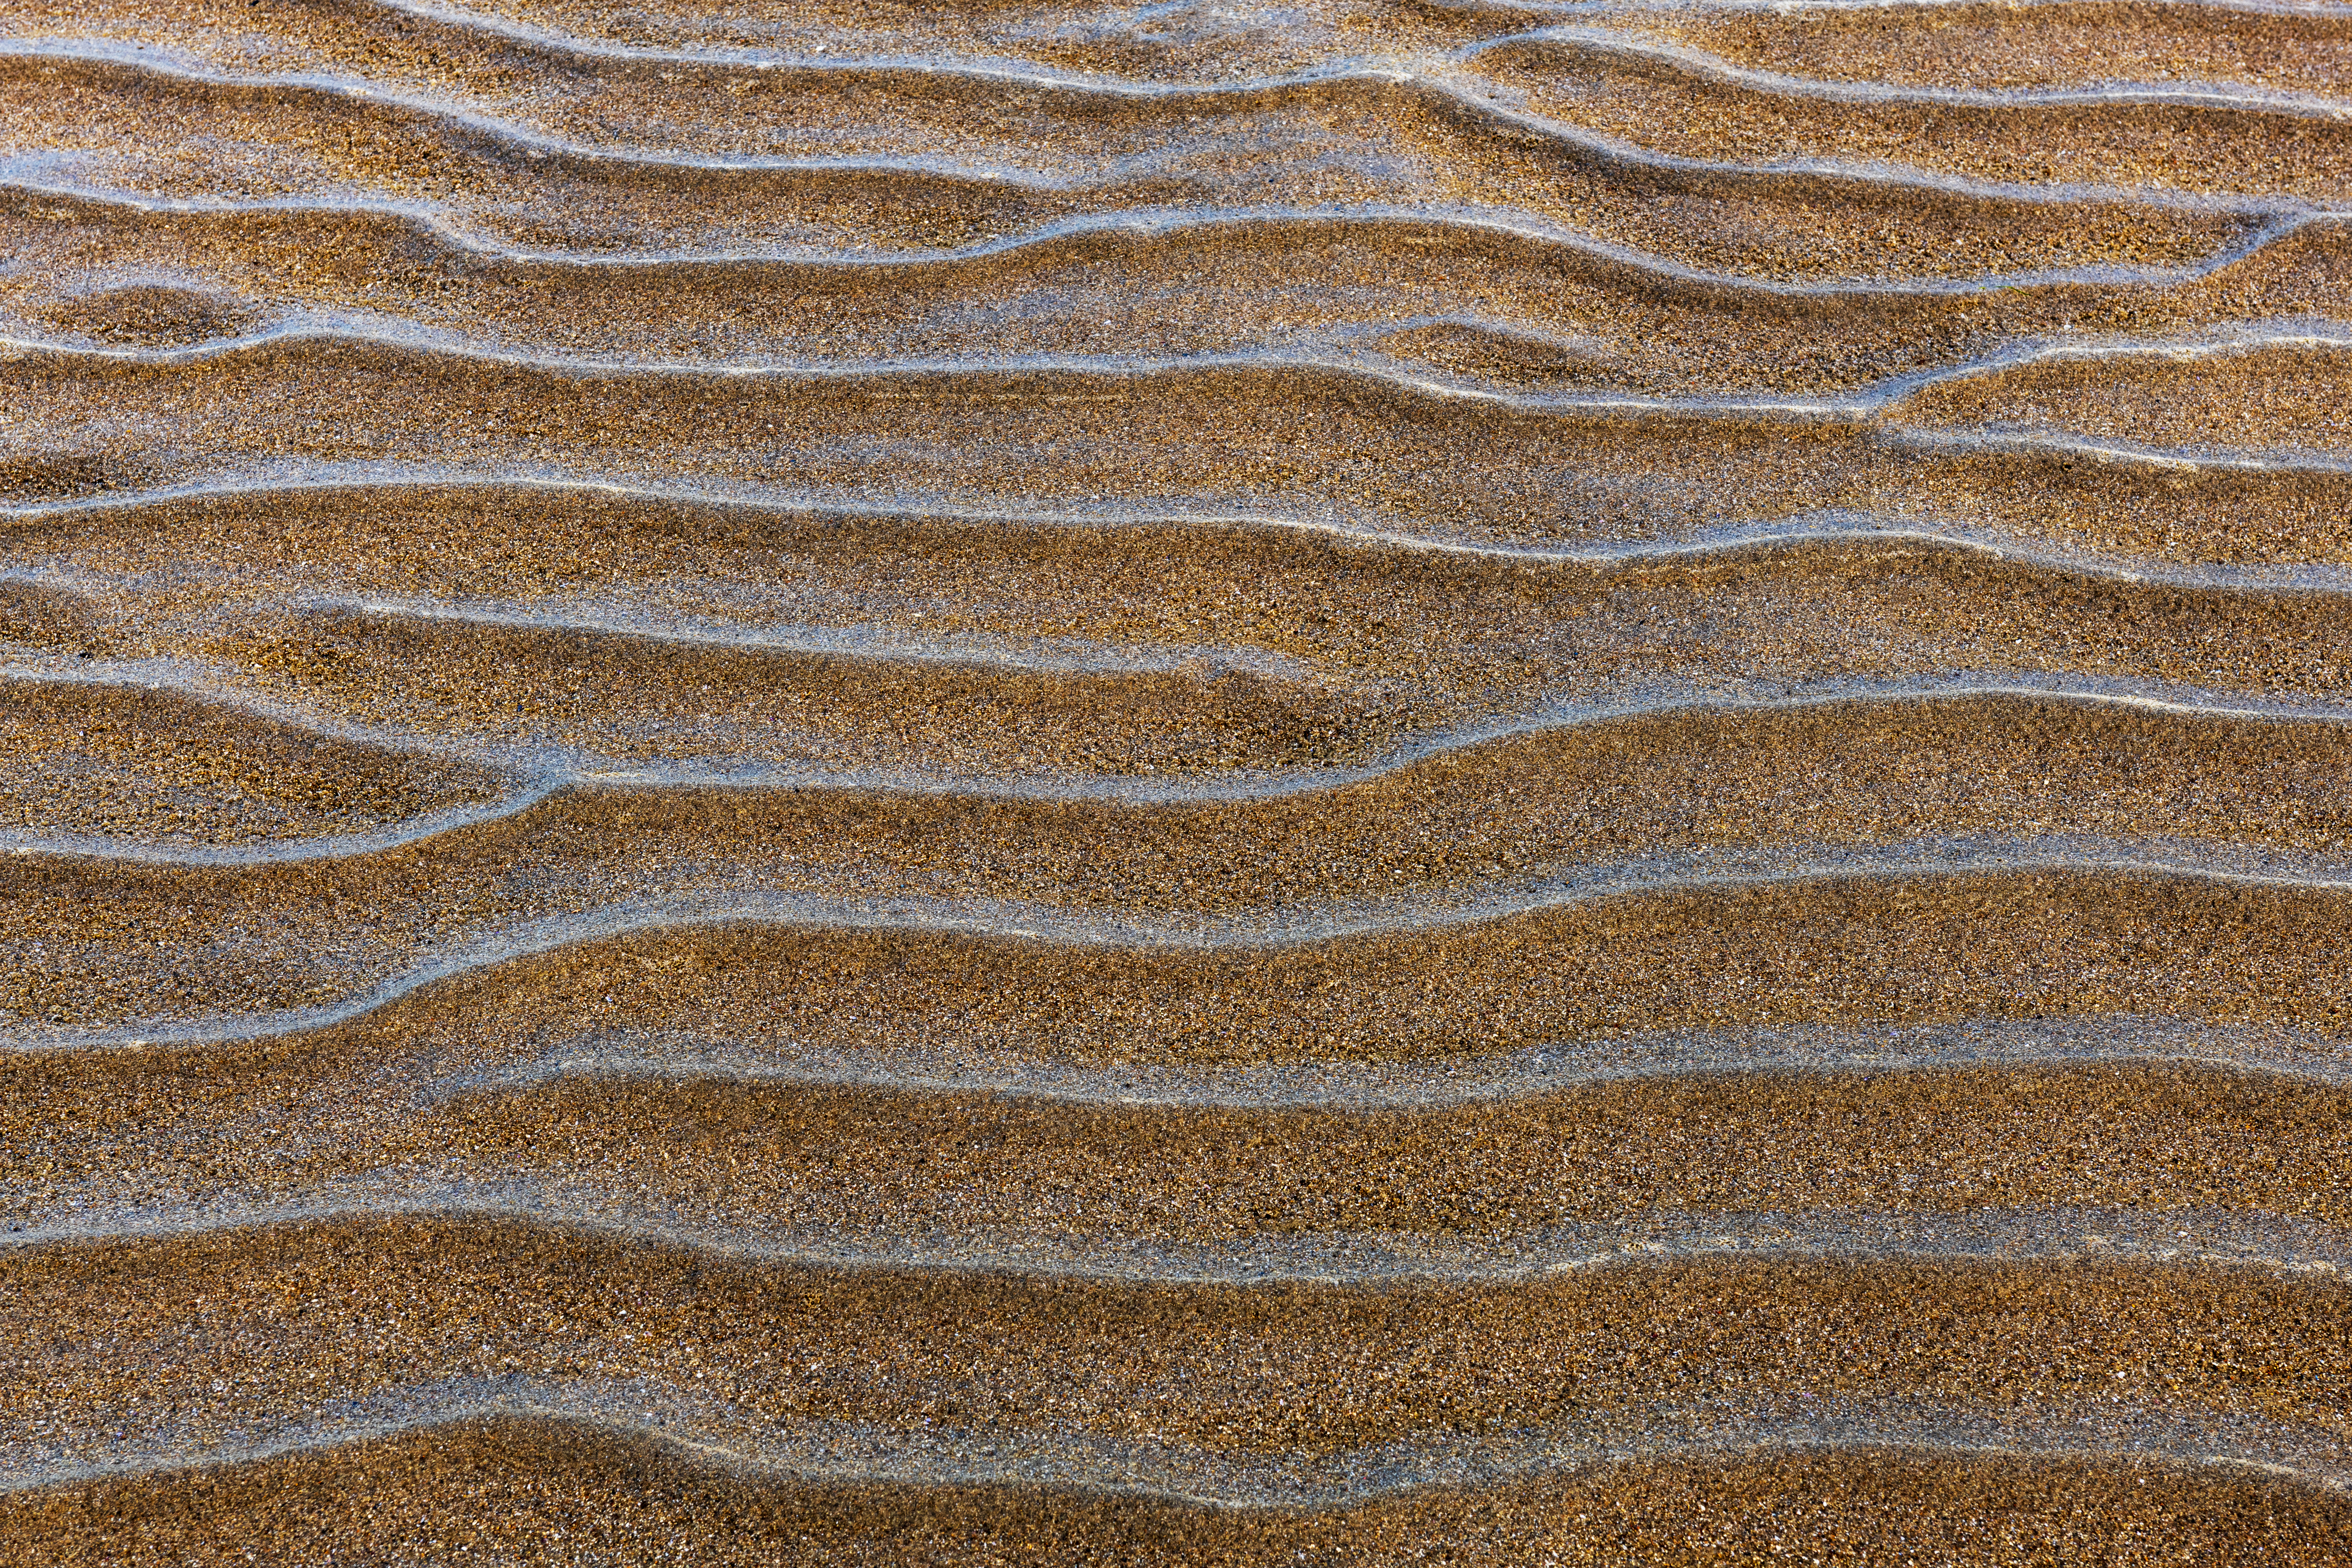 Waves of brown sand.